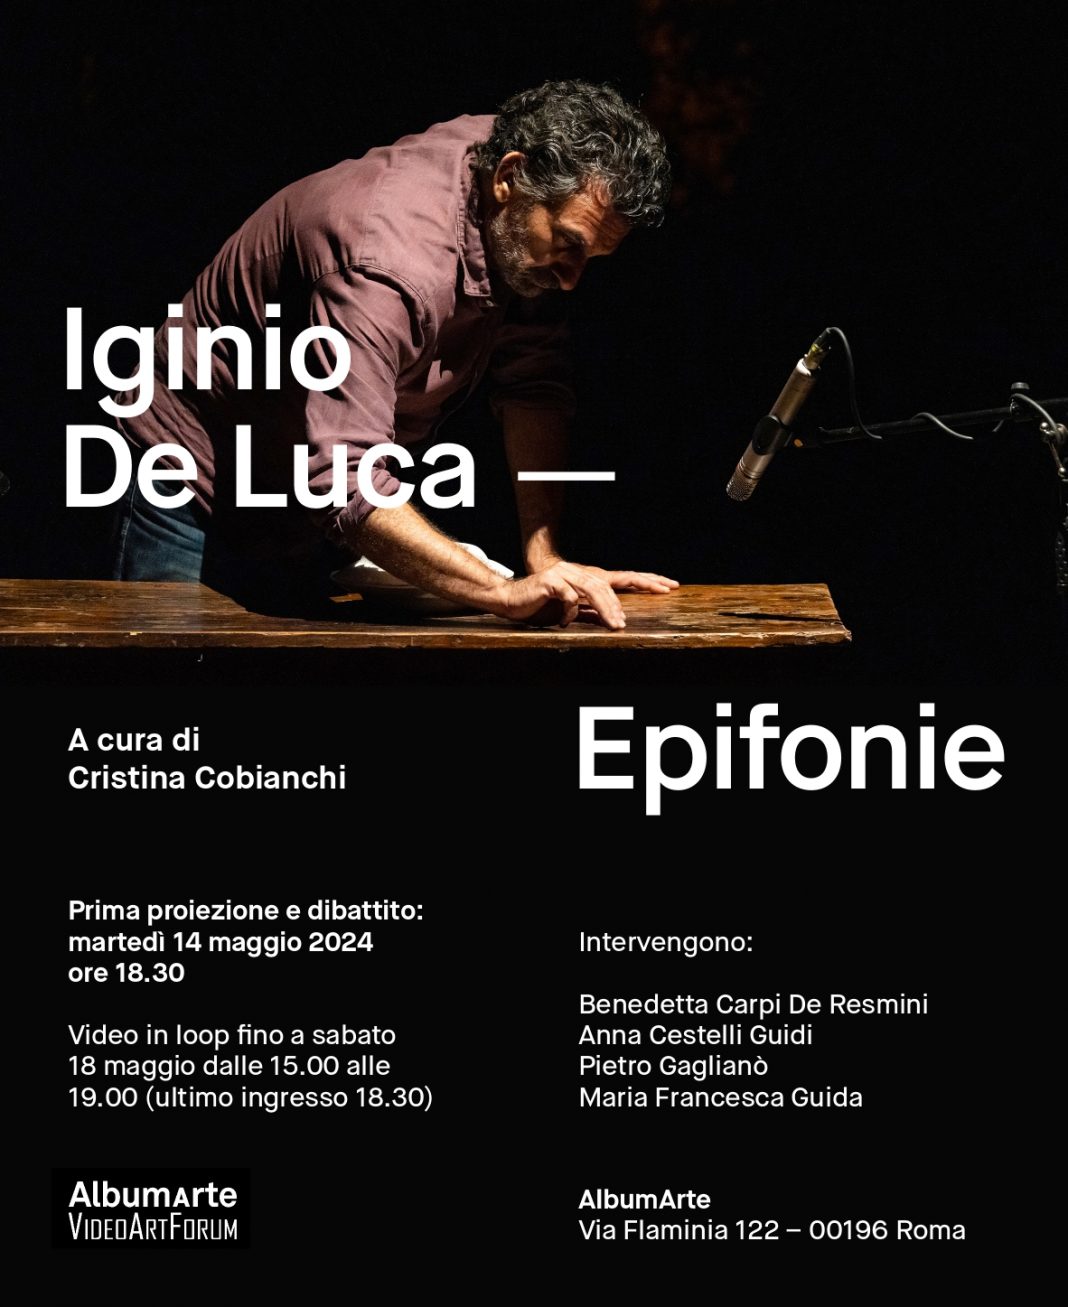 Iginio De Luca – Epifoniehttps://www.exibart.com/repository/media/formidable/11/img/de3/Iginio-De-Luca.-Epifonie_Invito_page-0001-1068x1307.jpg